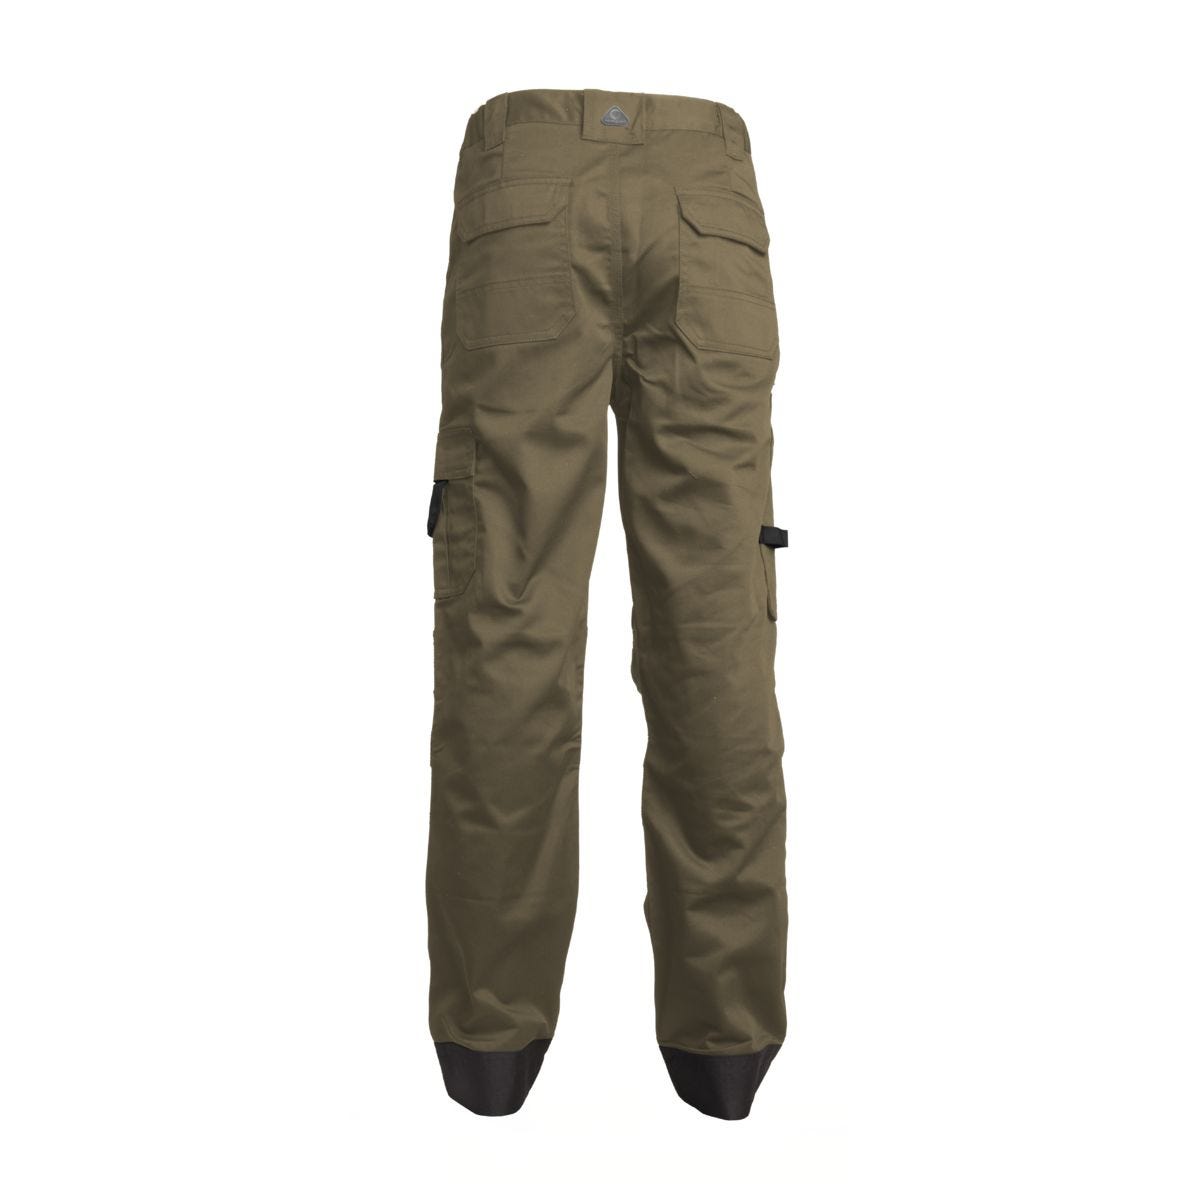 Pantalon CLASS beige - COVERGUARD - Taille XS 1